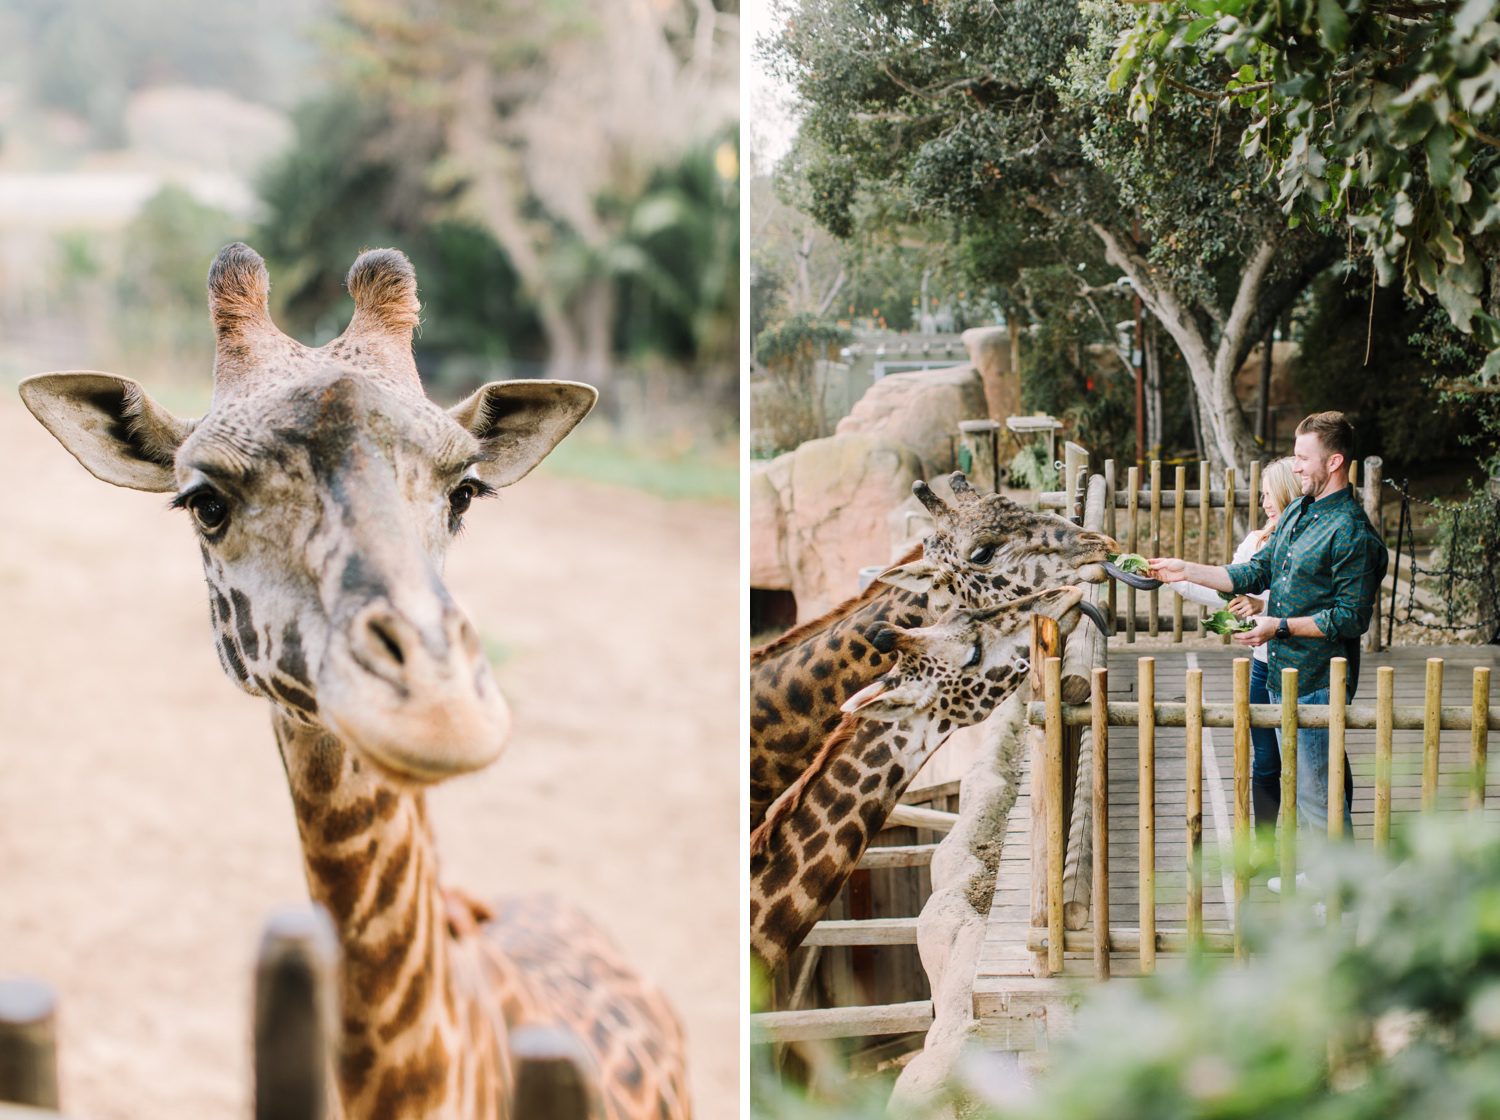 Giraffe at Zoo in California